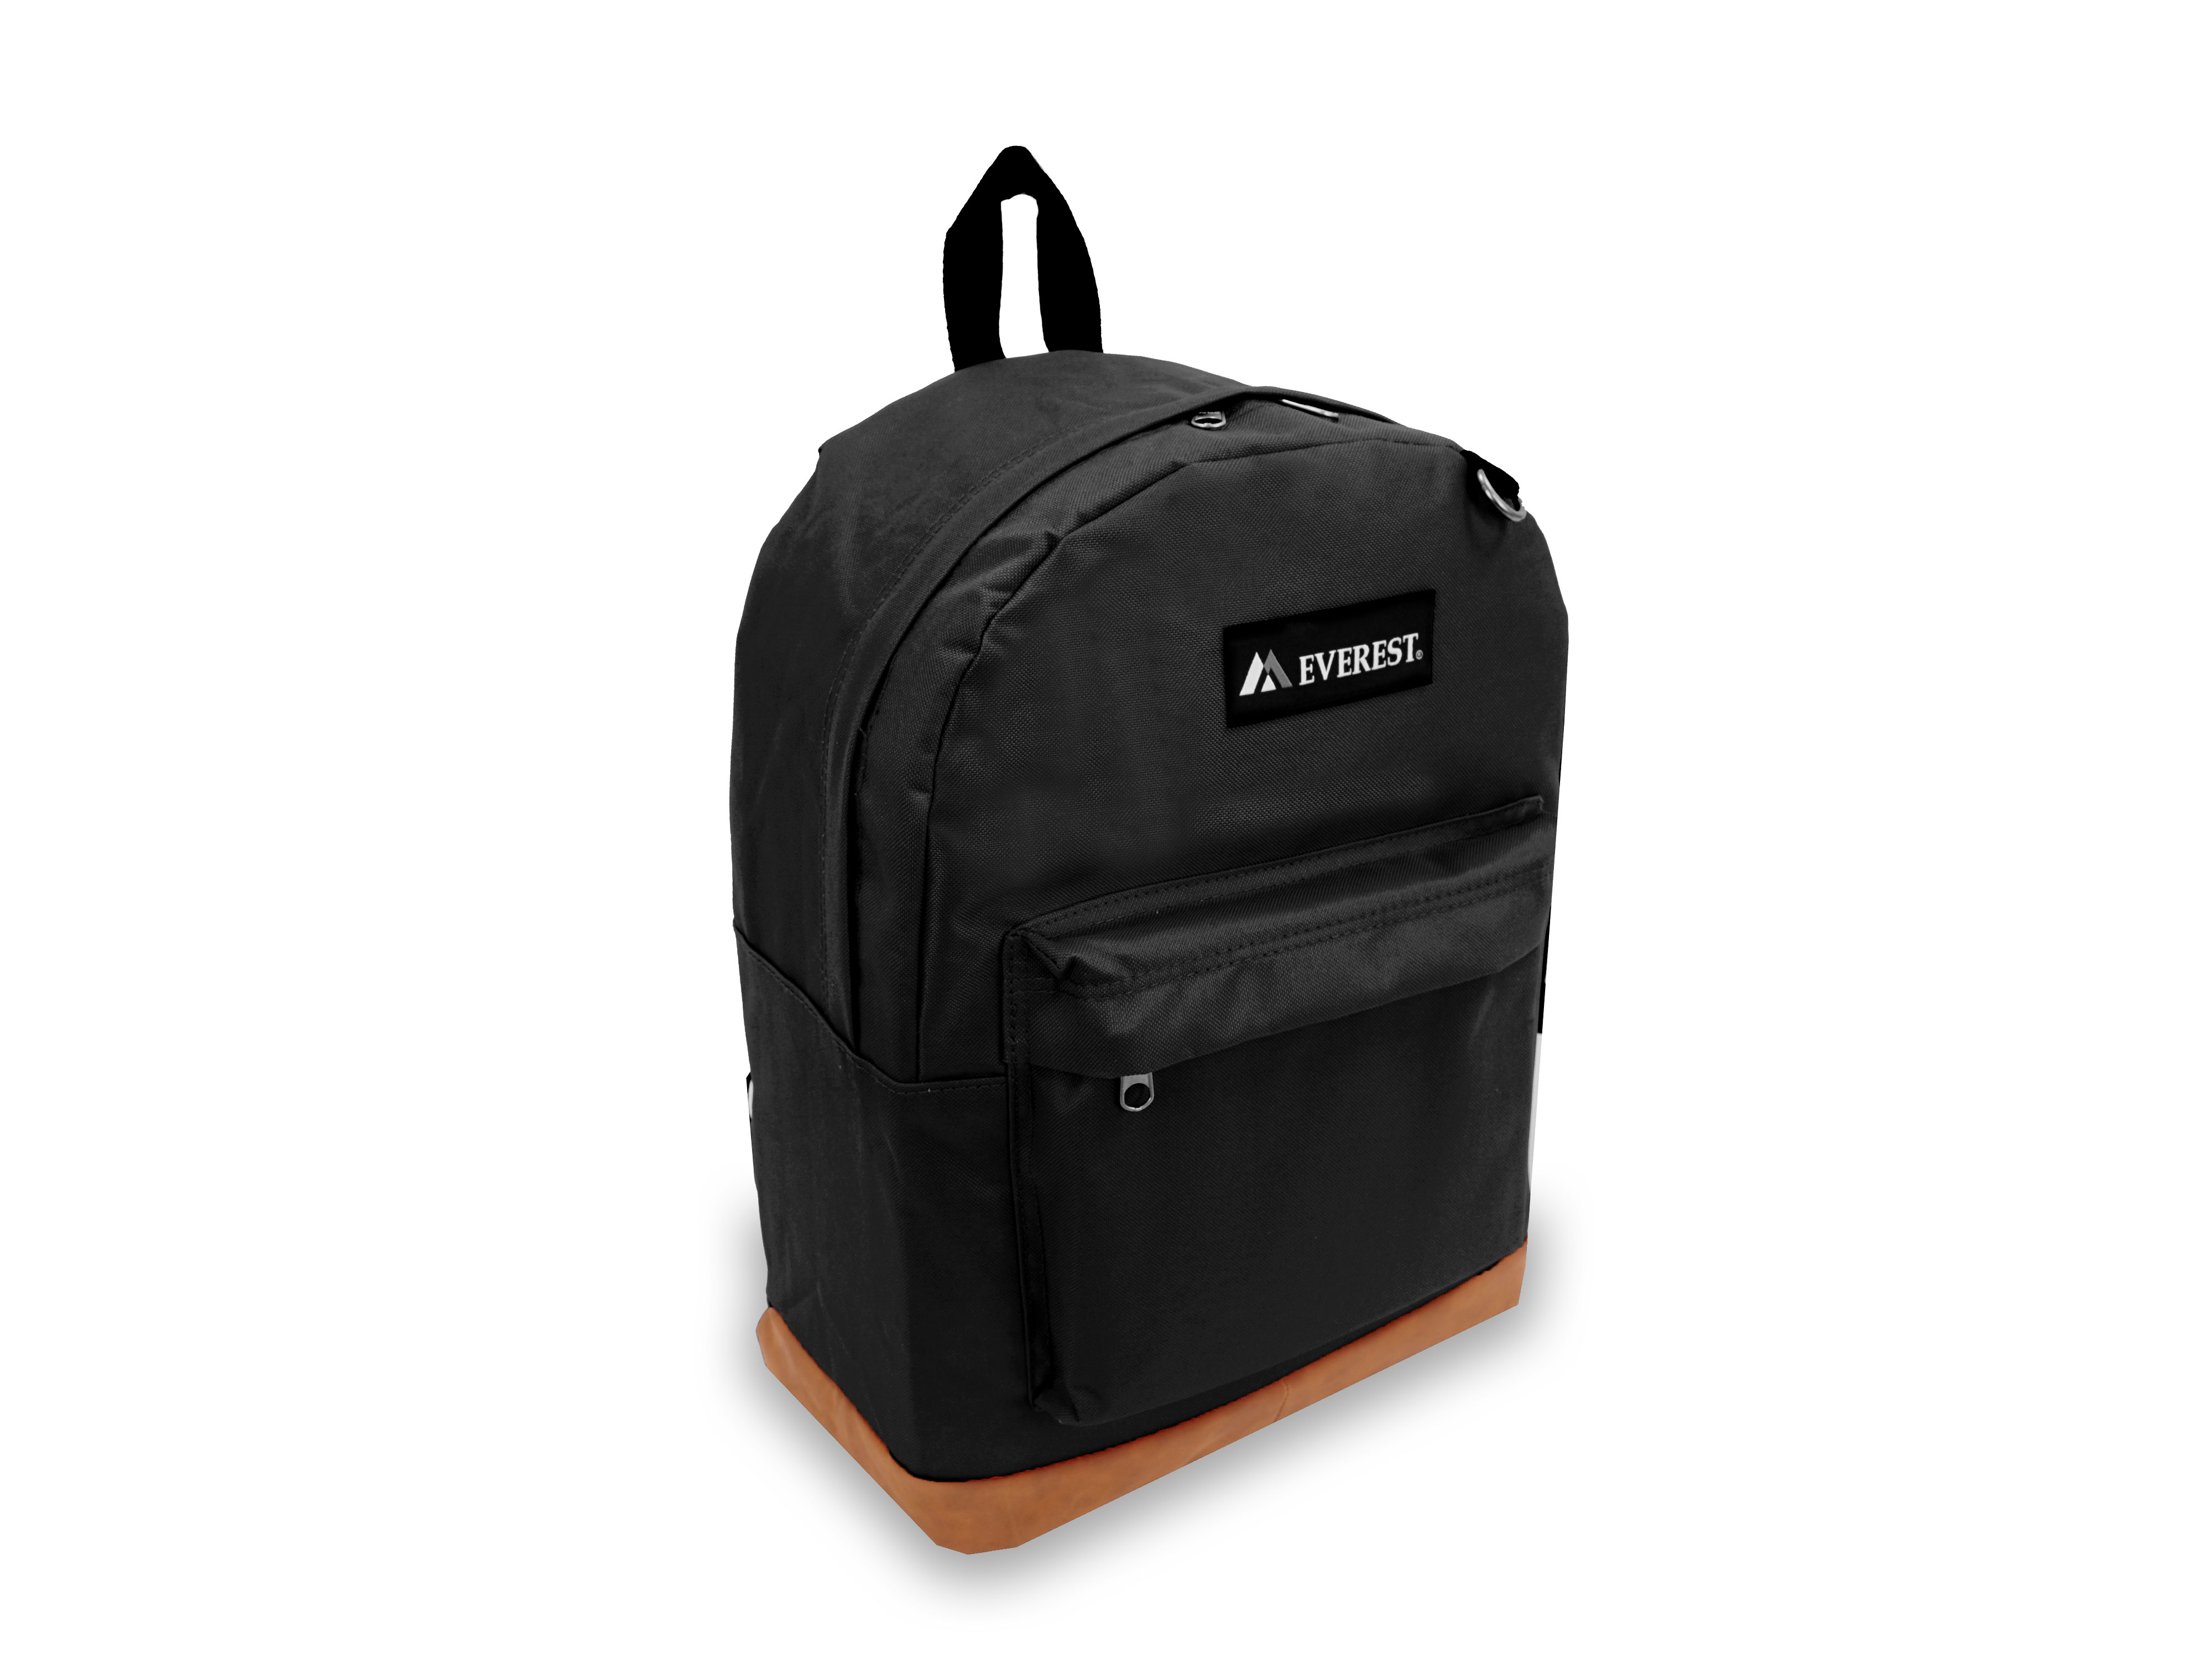 Everest 17" Suede Bottom Backpack, Black All Ages, Unisex 1045GL-BK, Carrier and Shoulder Book Bag for School, Work, Sports, and Travel - image 2 of 4